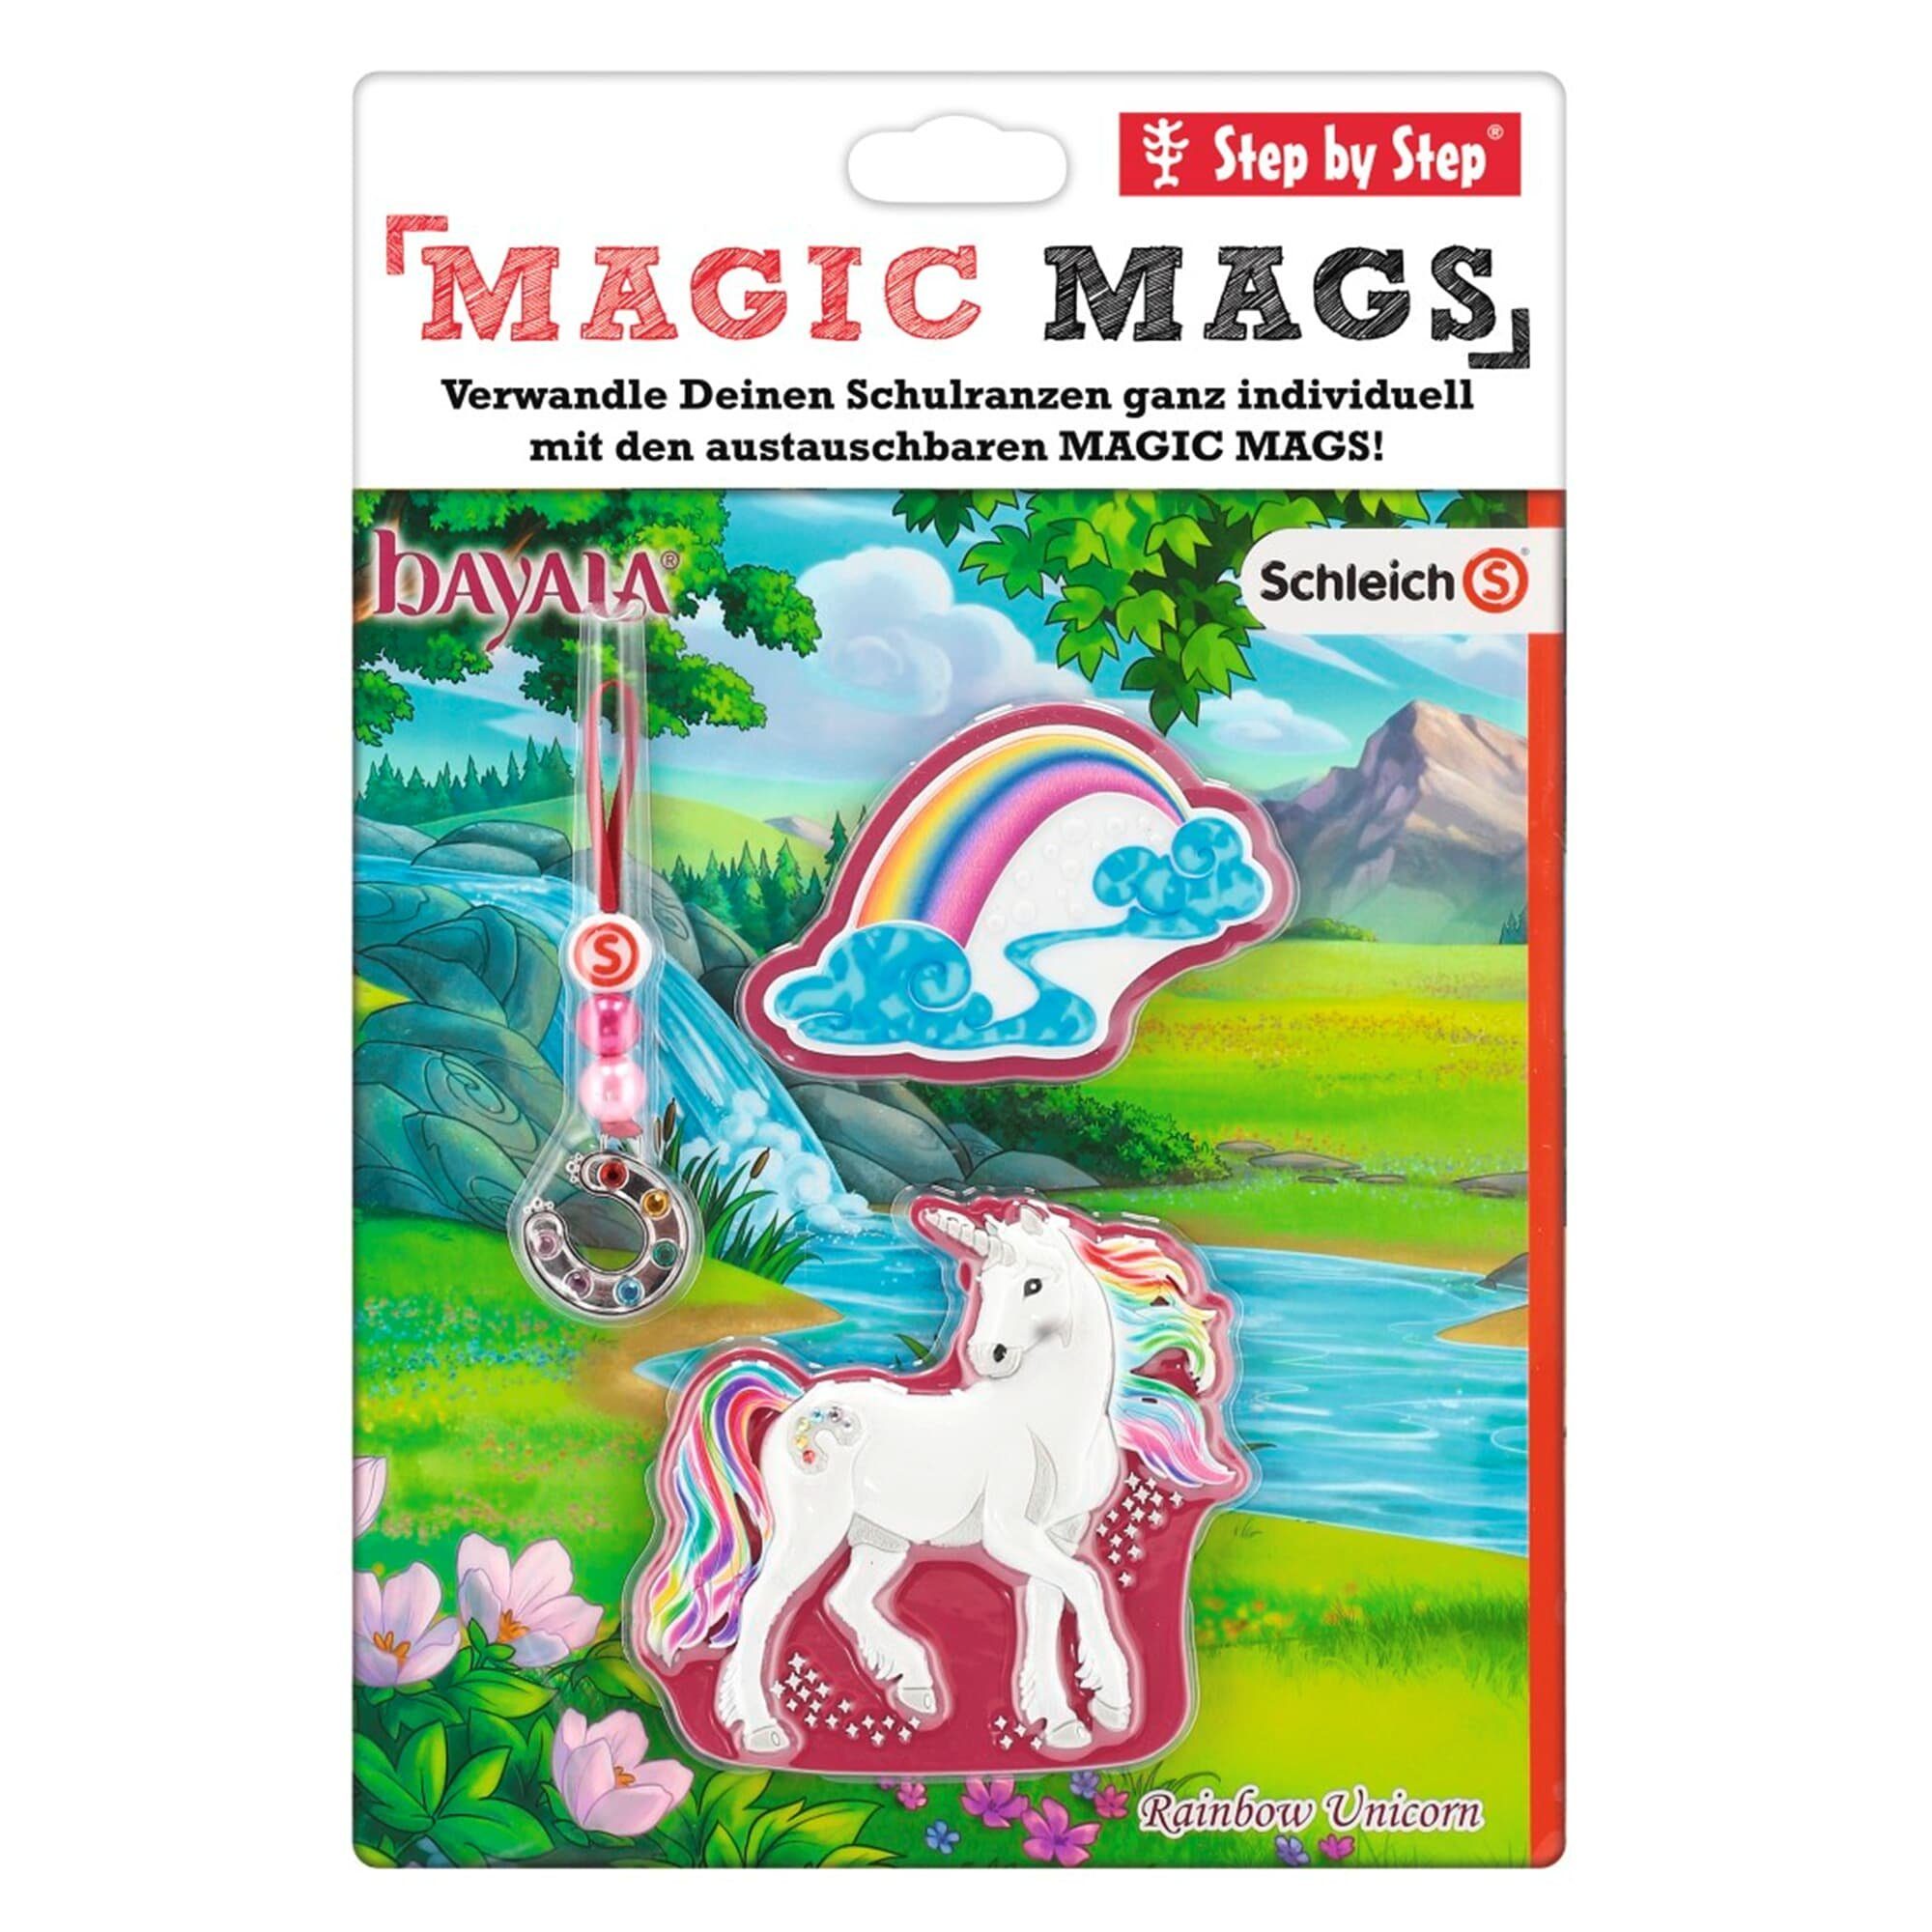 Step by Step Schulranzen MAGIC MAGS bayala®, Rainbow Unicorn